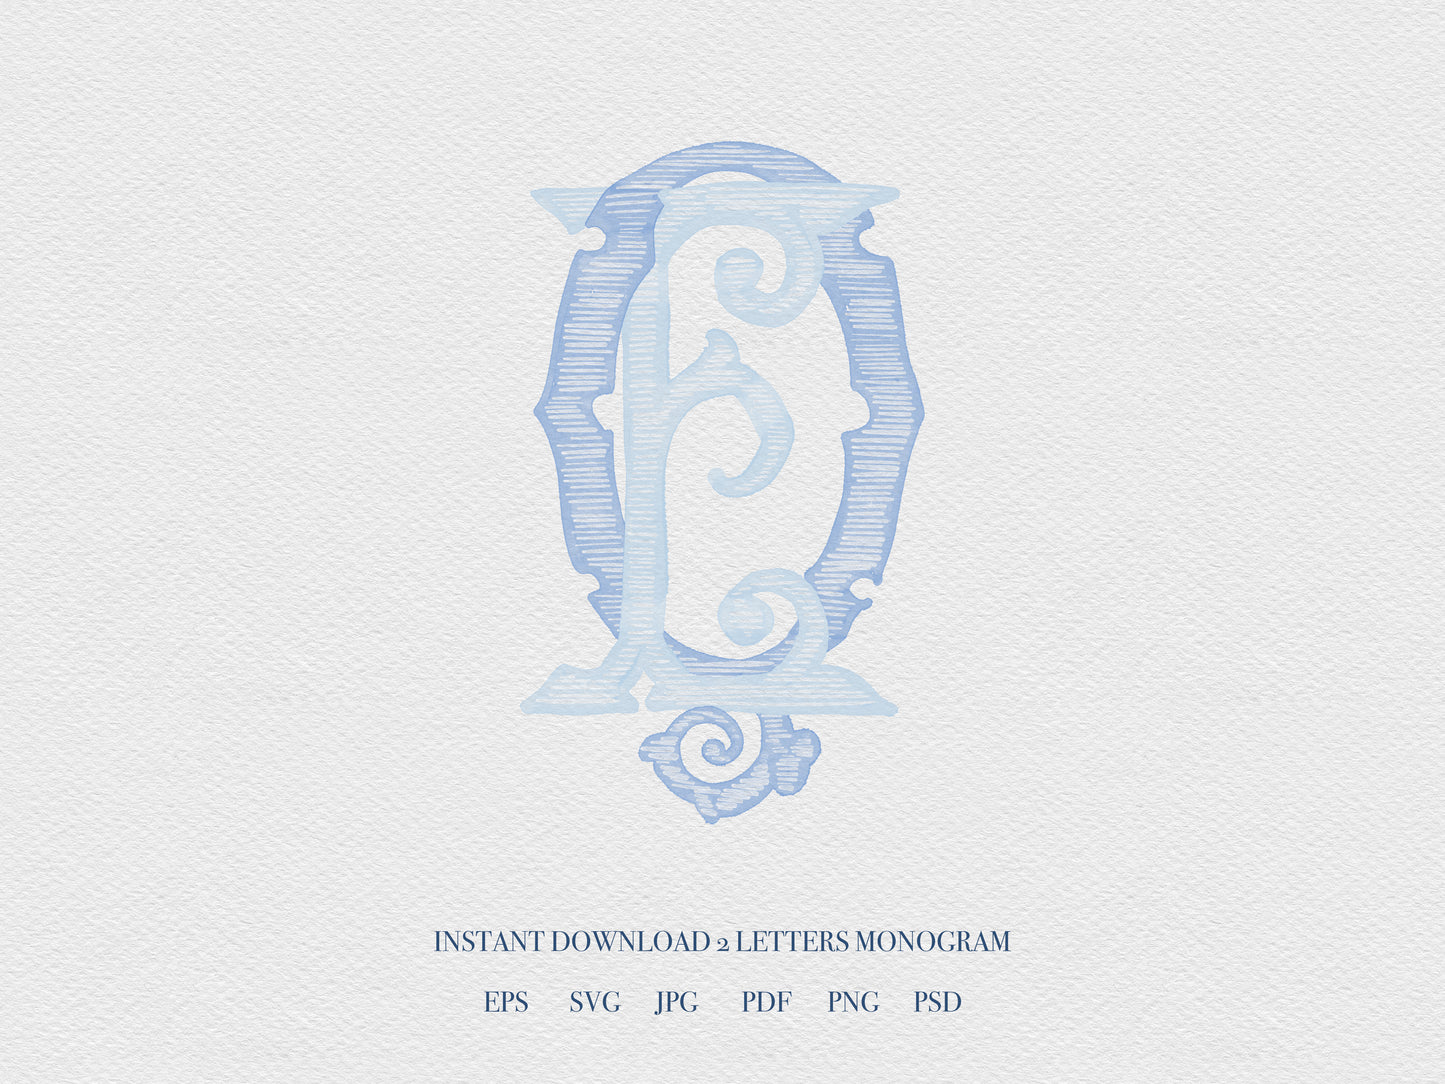 2 Letter Monogram with Letters EQ QE | Digital Download - Wedding Monogram SVG, Personal Logo, Wedding Logo for Wedding Invitations The Wedding Crest Lab